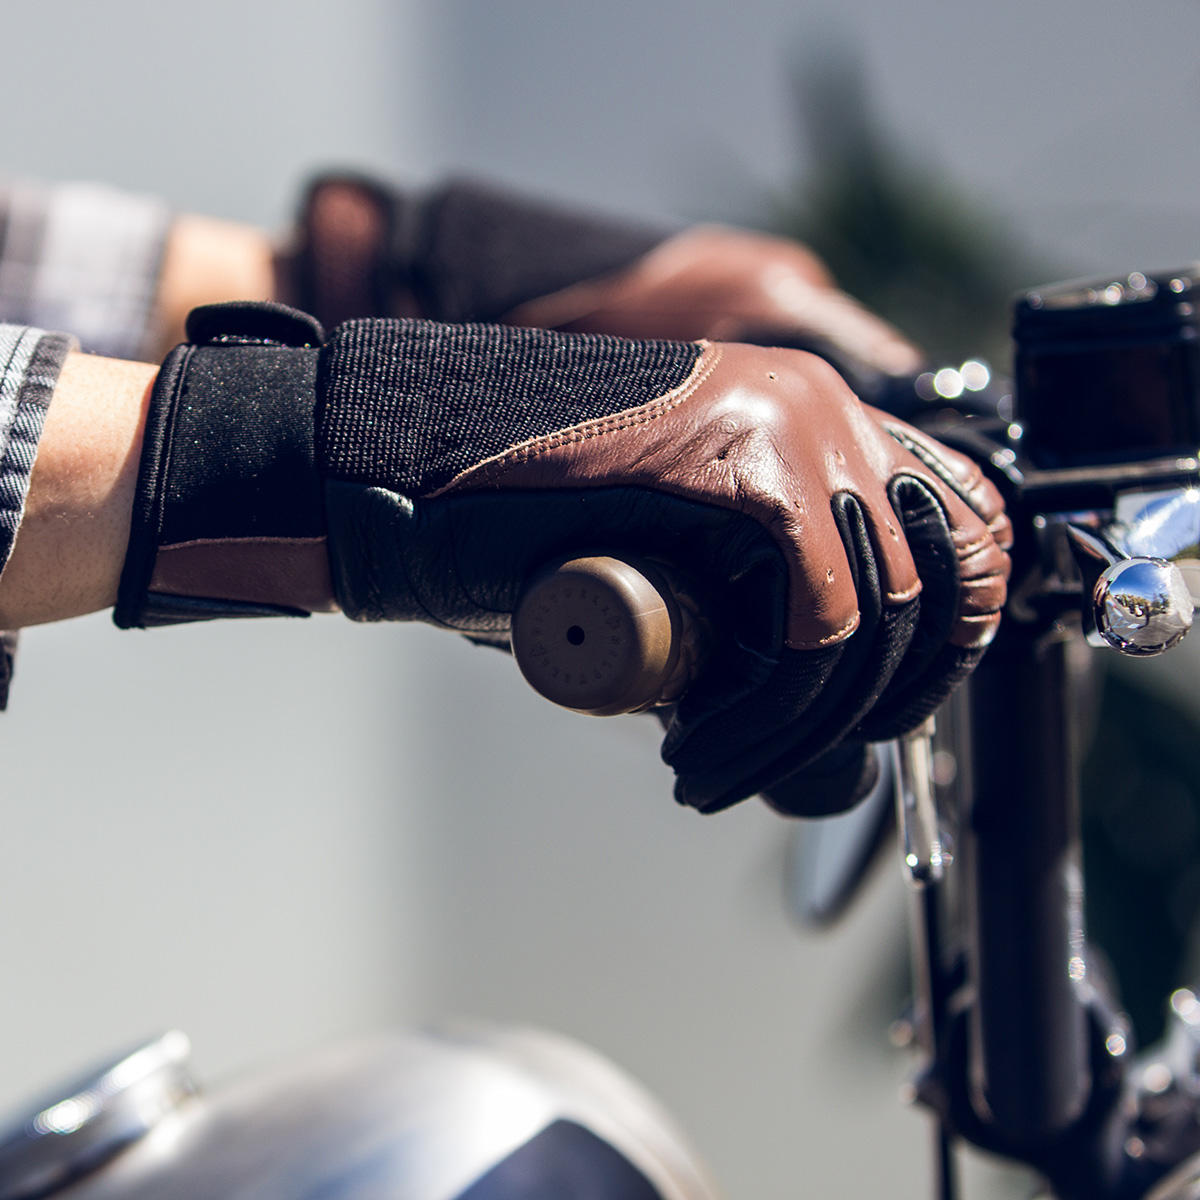 Biltwell Bantam Motorcycle Gloves - Chocolate/Black - MotoHeaven